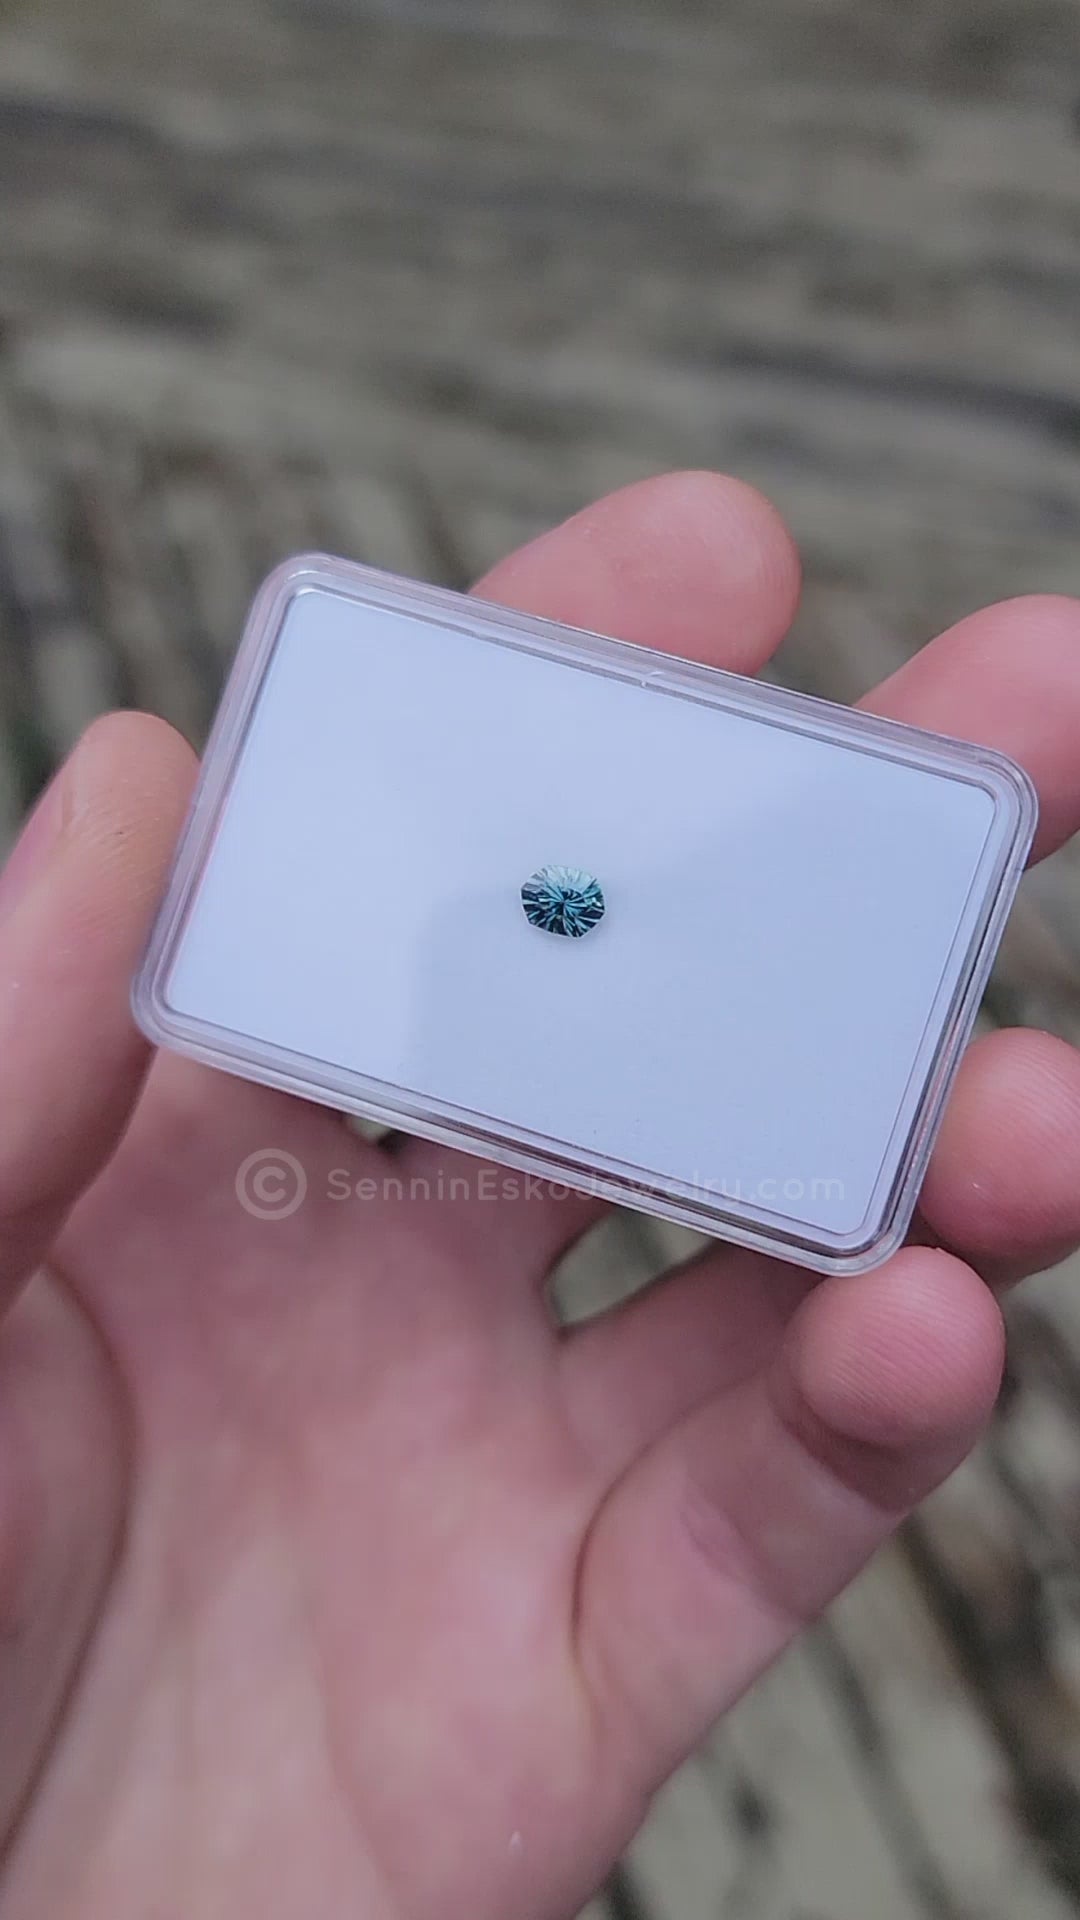 0.67 carat Teal Sapphire Hexagon - 6x4.6mm - Fantasy Cut